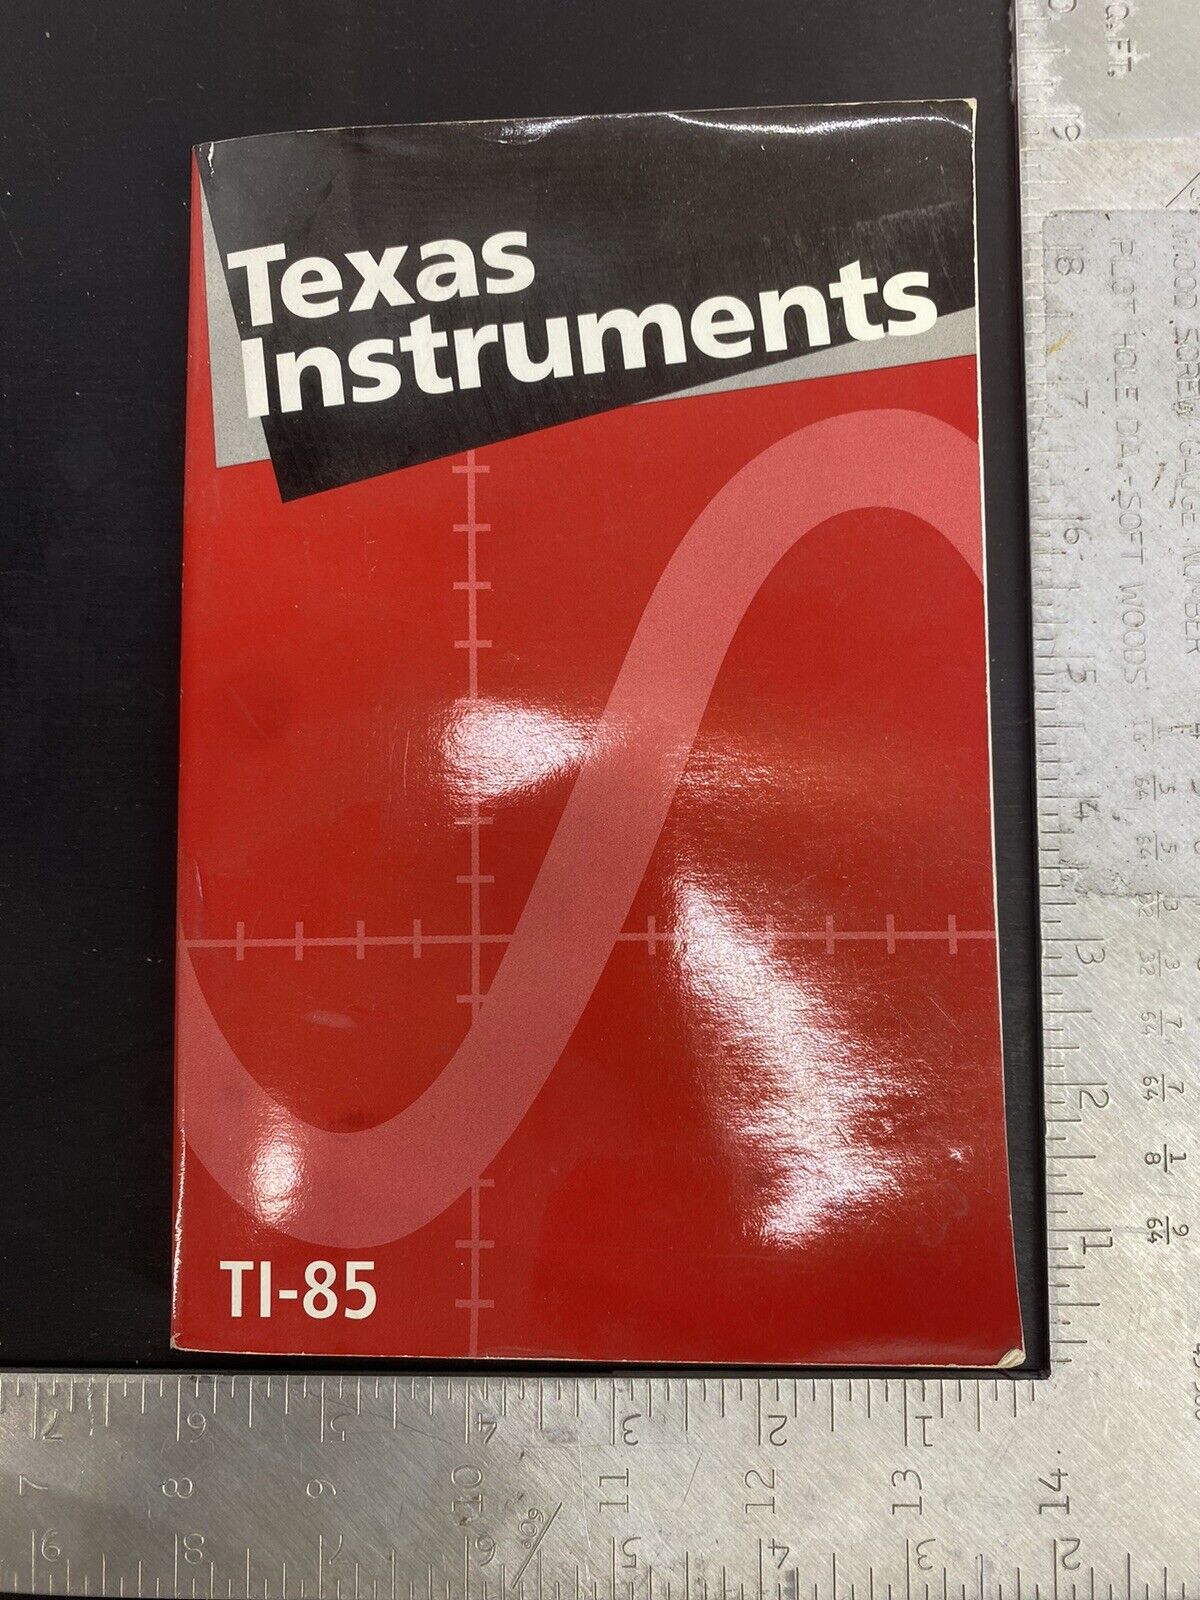 Texas Instruments TI-85 Graphics Calculator Manual Guidebook 1993 Paperback